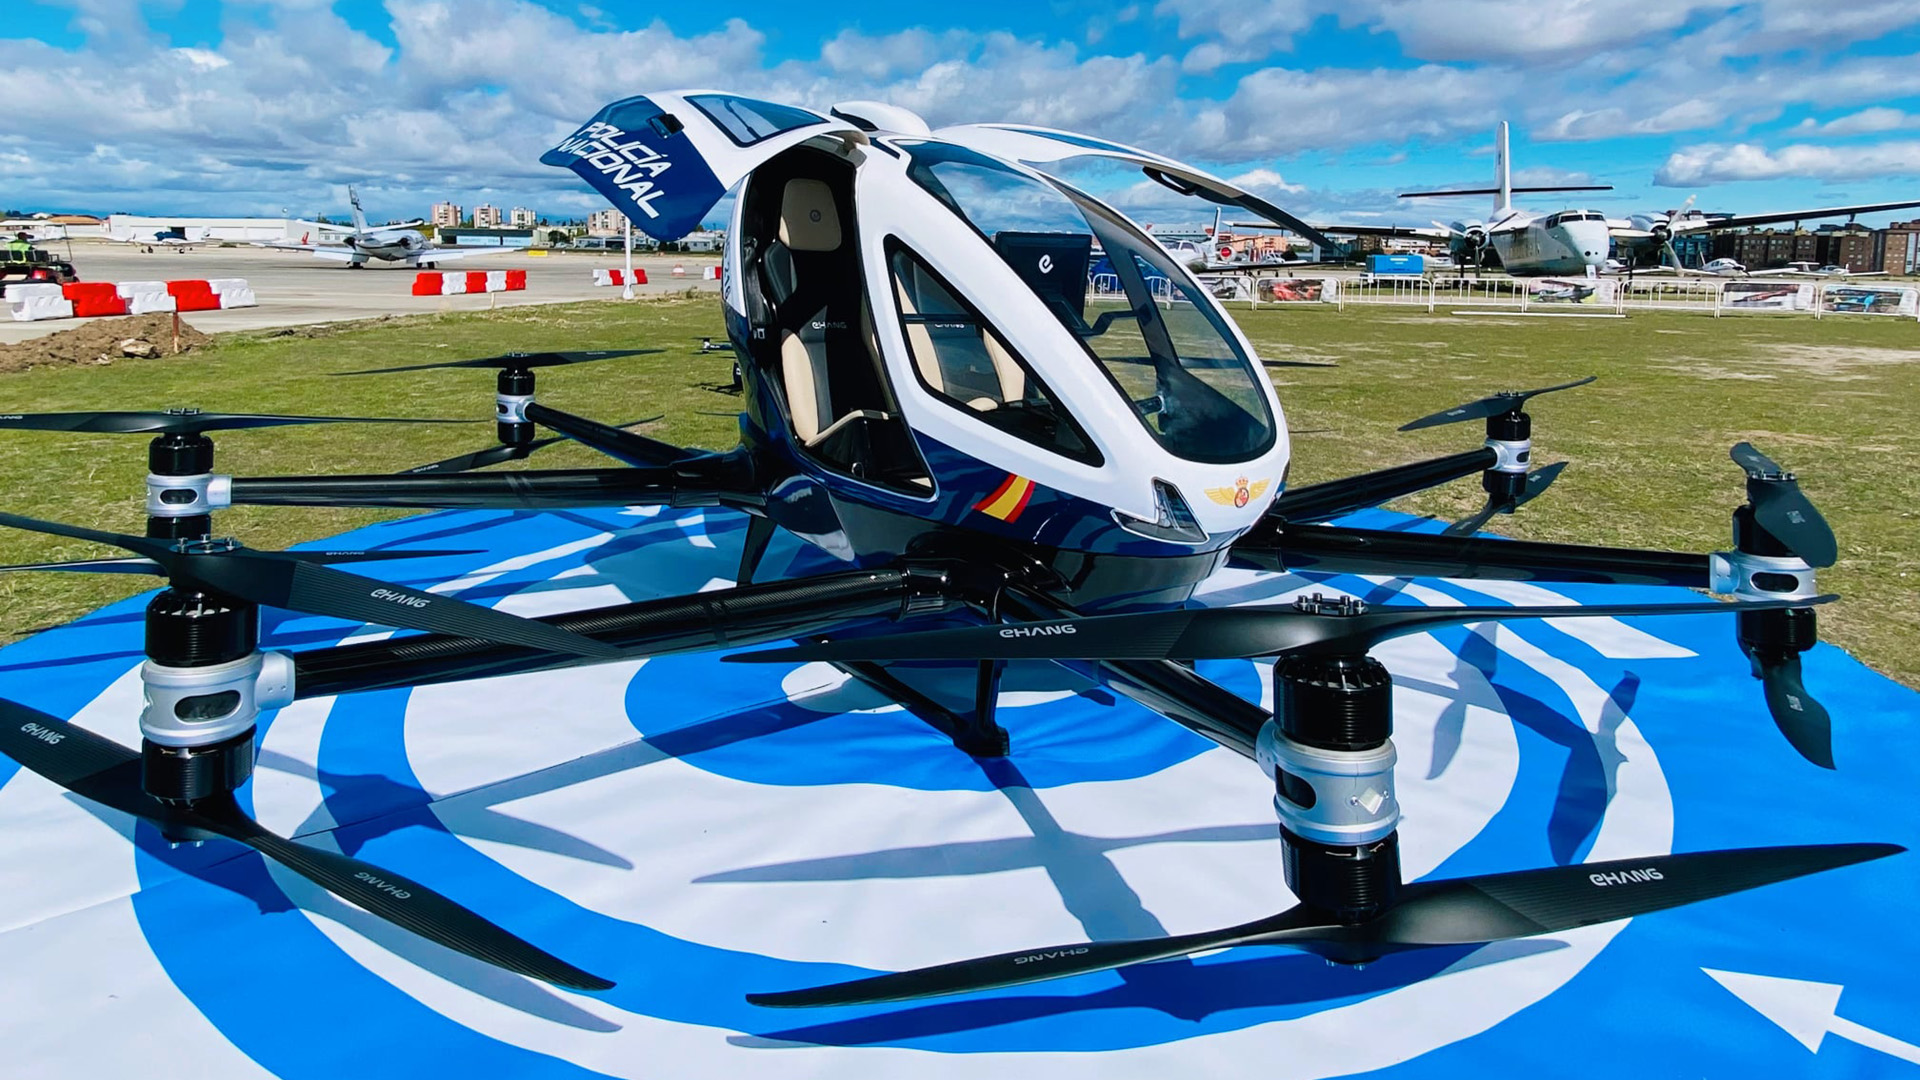 Ensayan un dron como vehículo para la policía en España